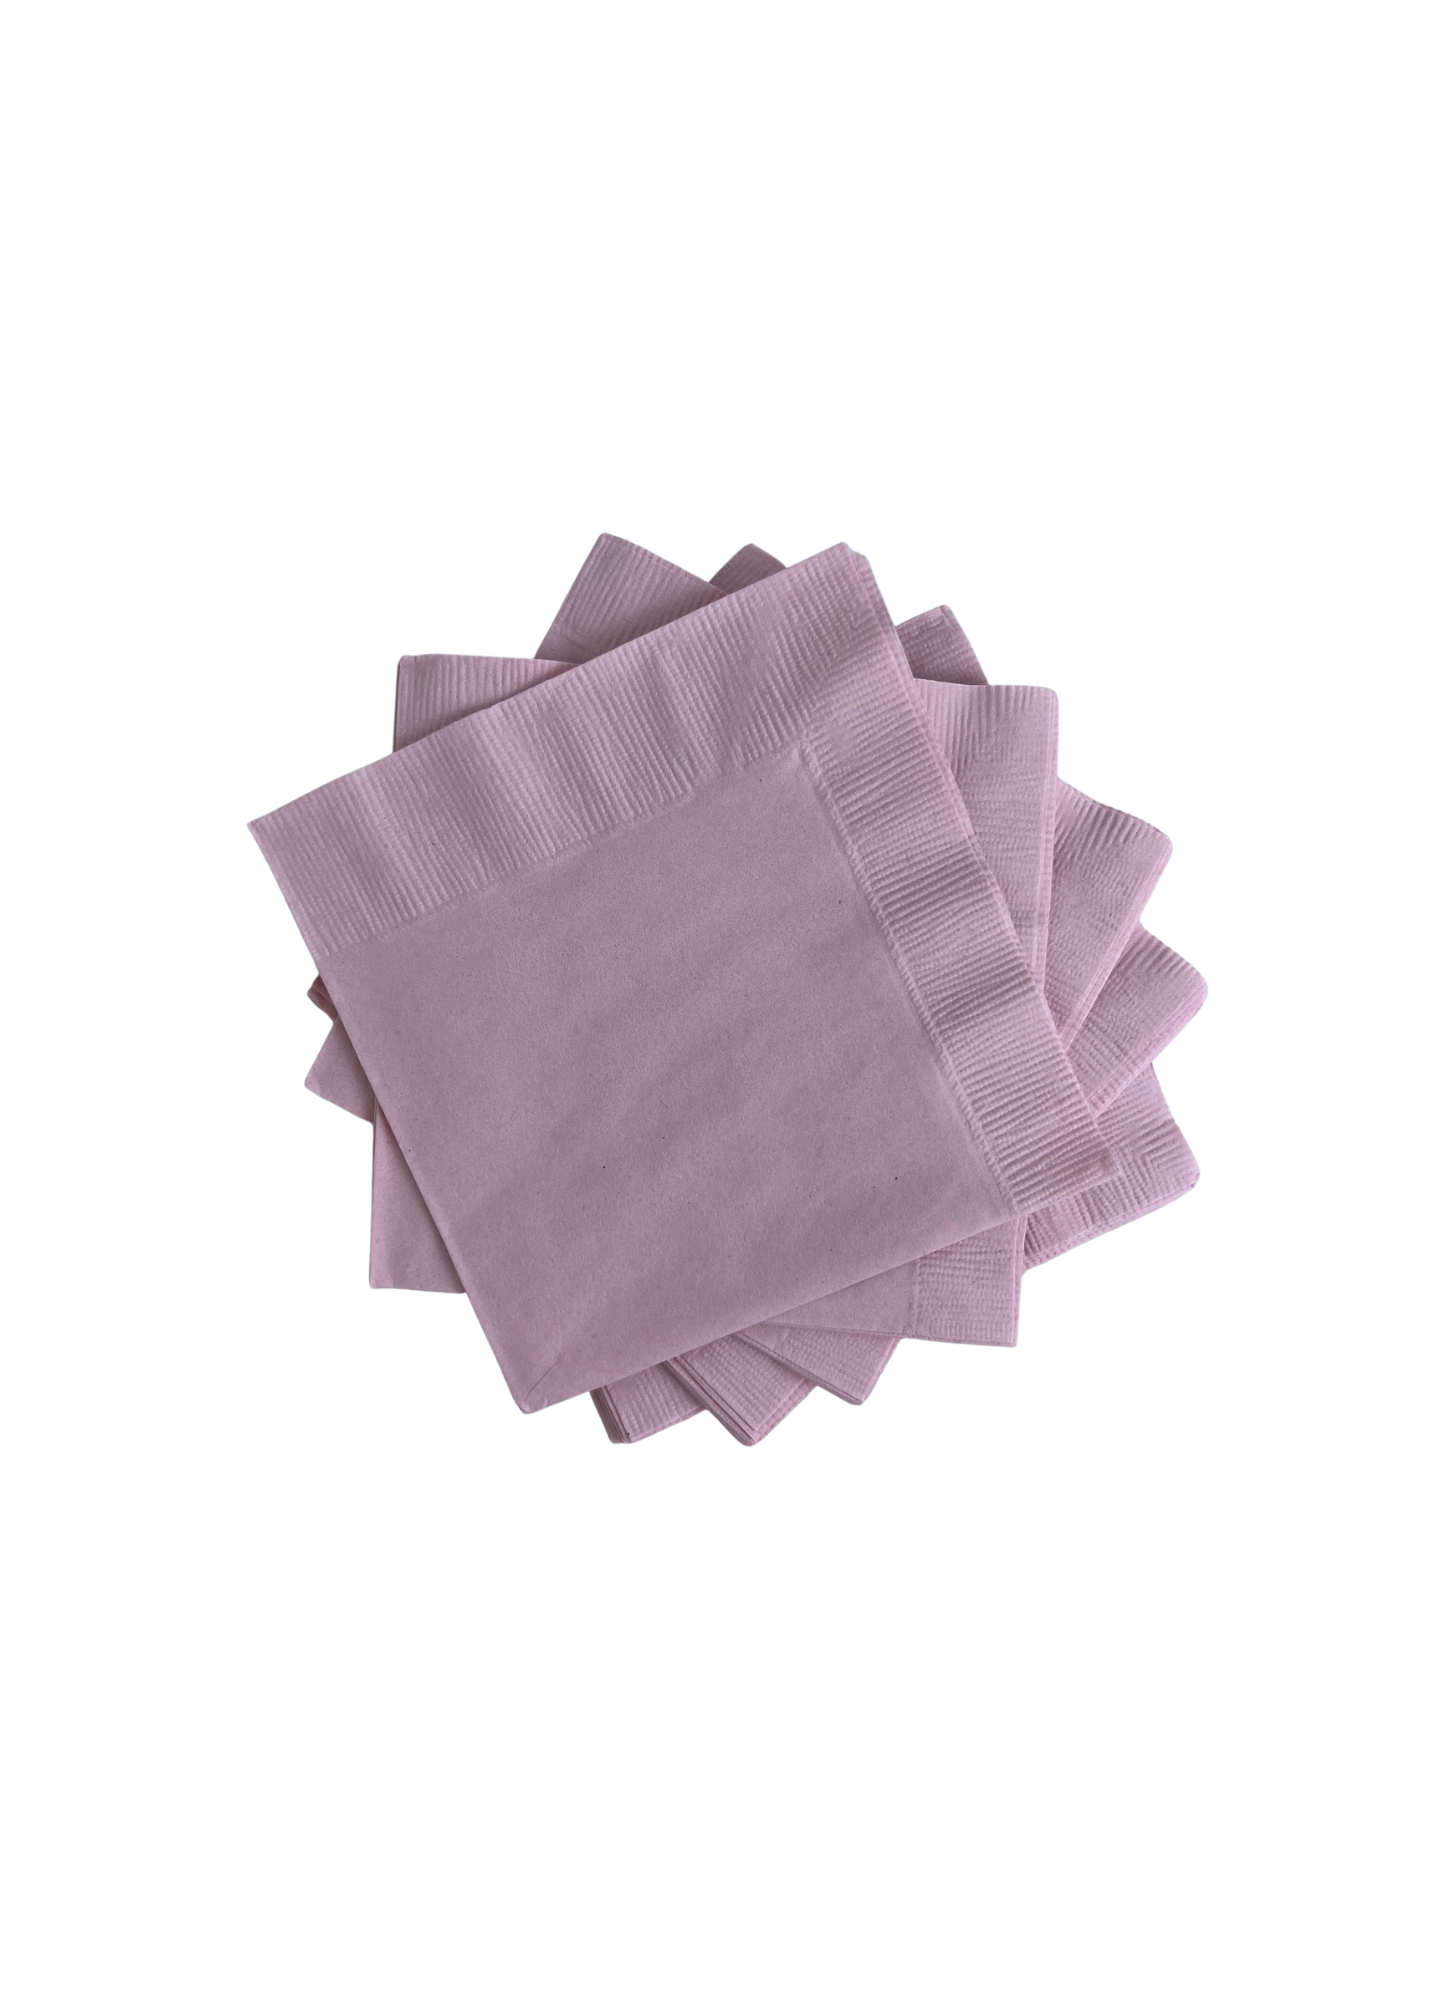 Stack of Pink Paper Napkins